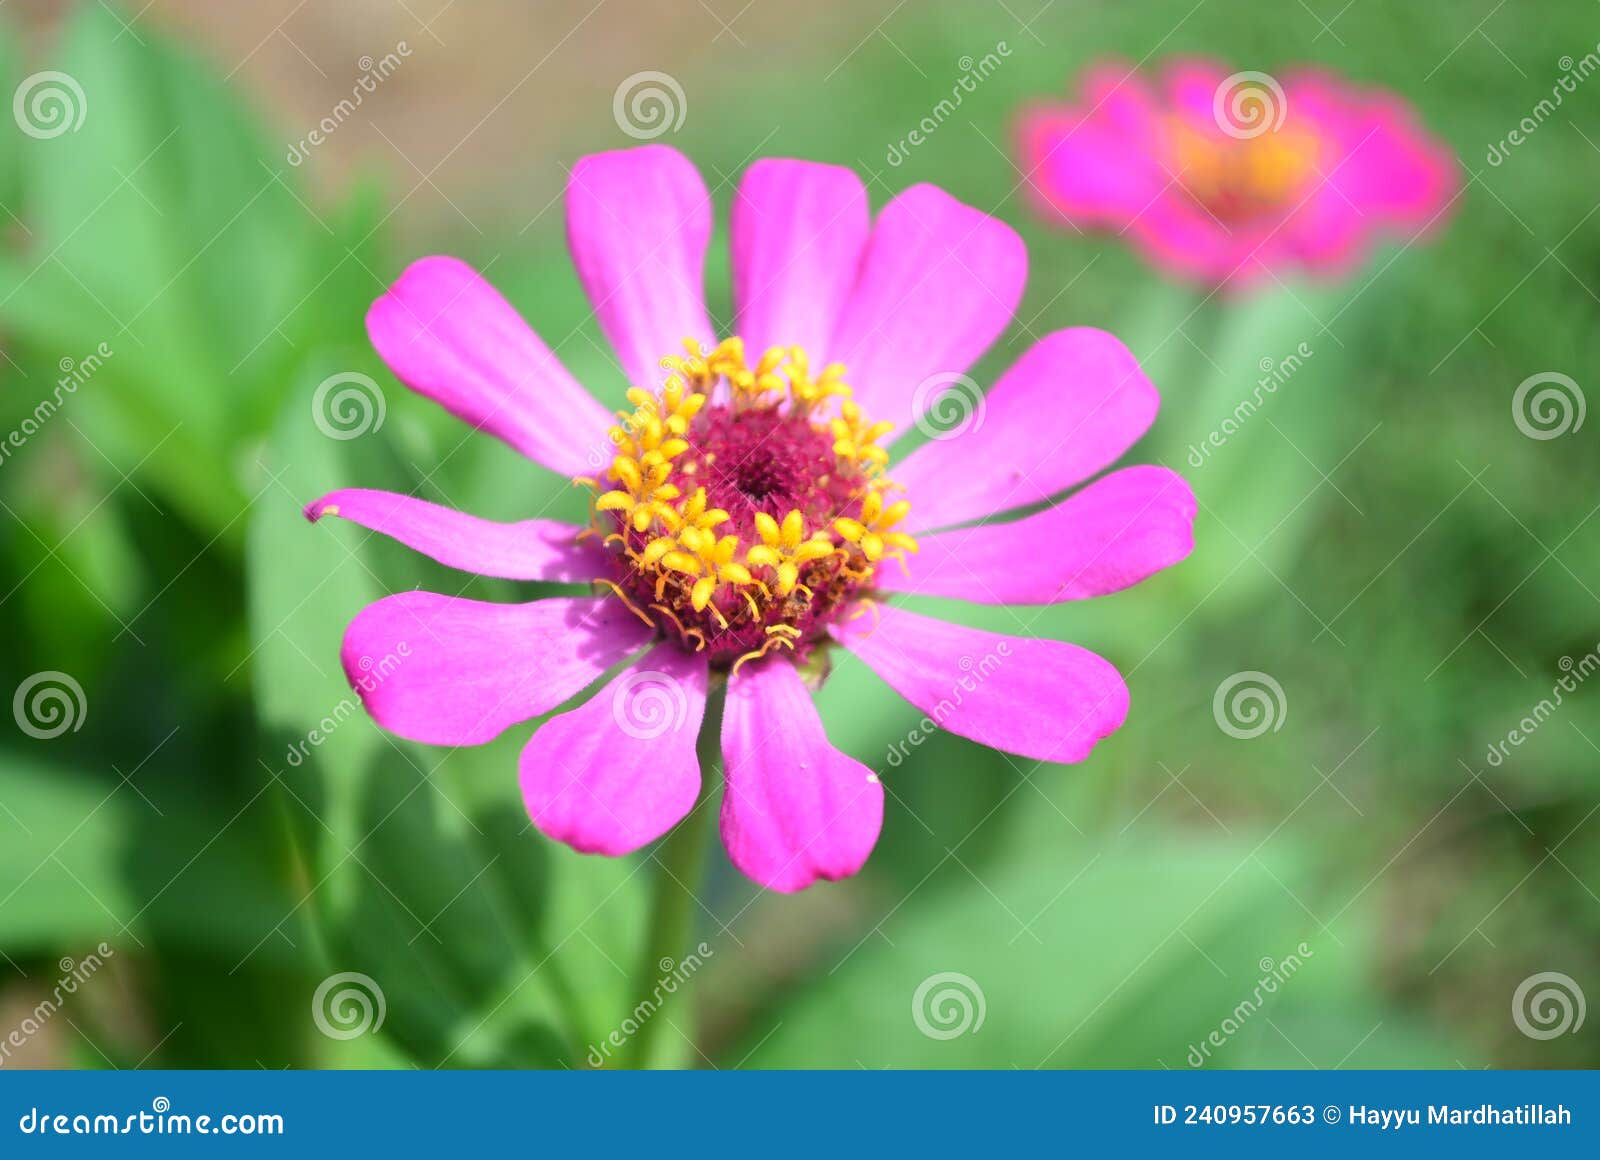 Pink flower stock image. Image of flower, sunny, pink - 240957663